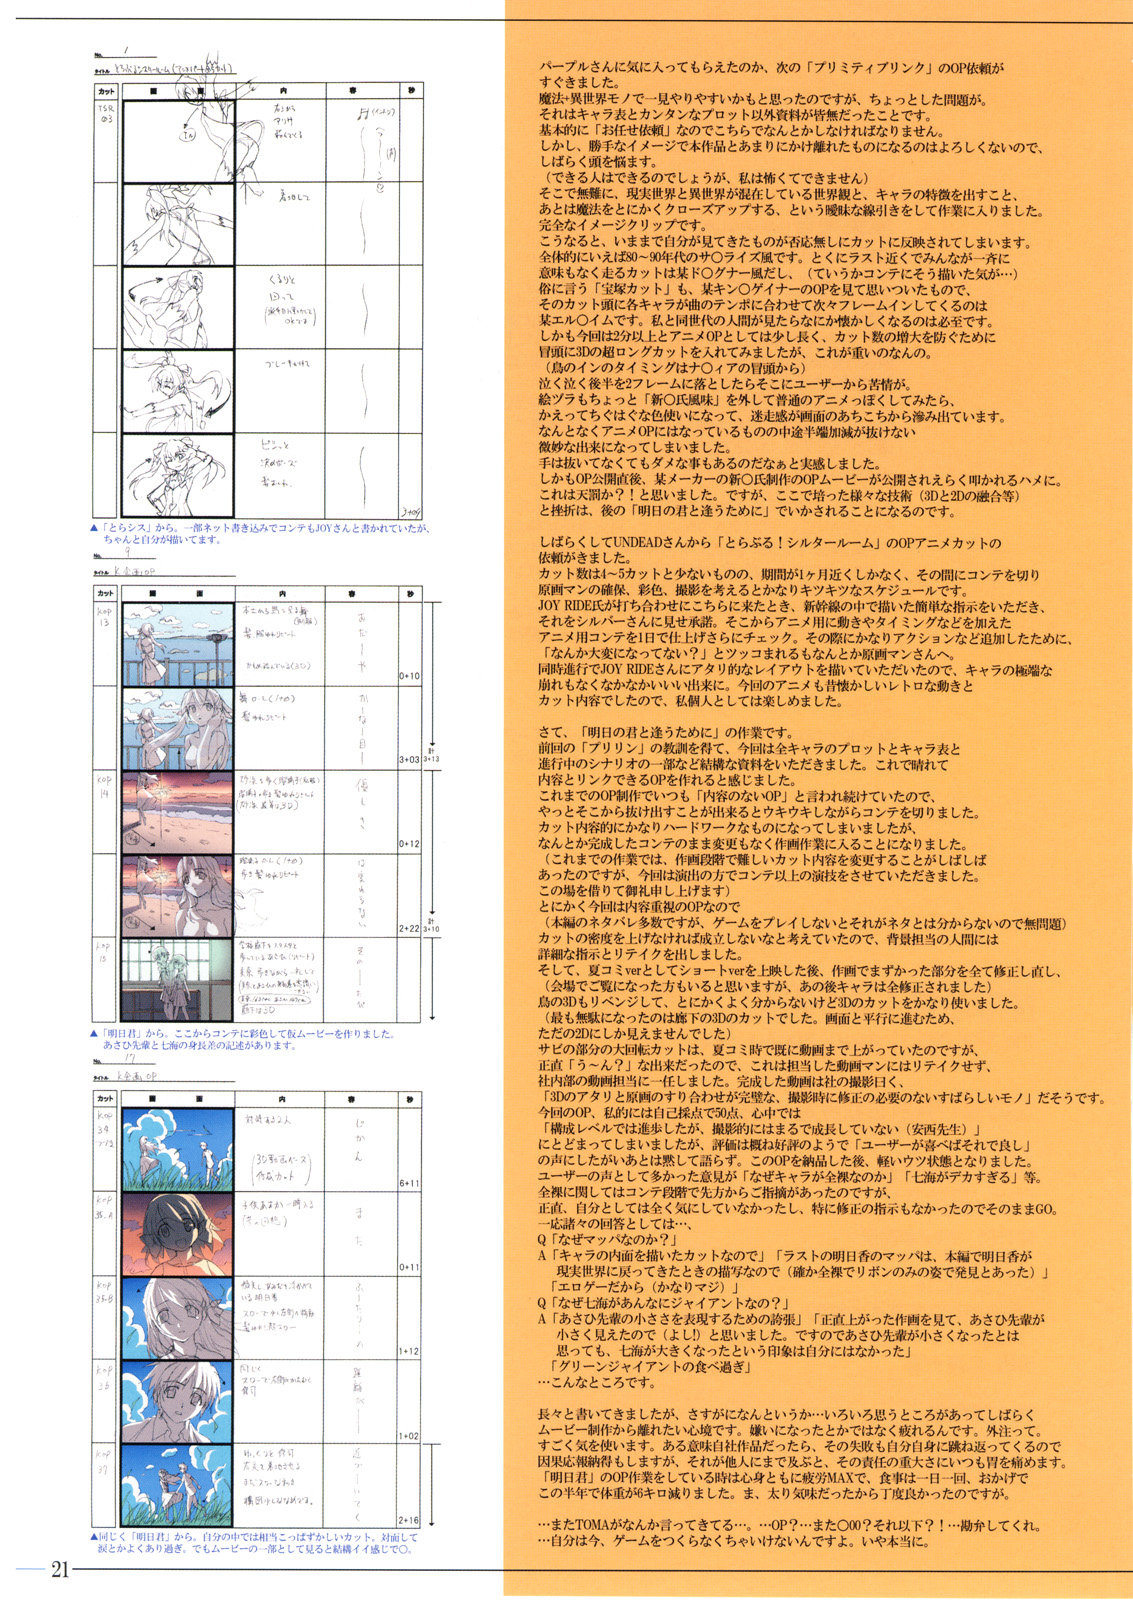 (C73) [マキノ事務所 (滝美梨香)] MINASHIKA WORKS Vol 06 メガストア表紙コレクション2007.1~12